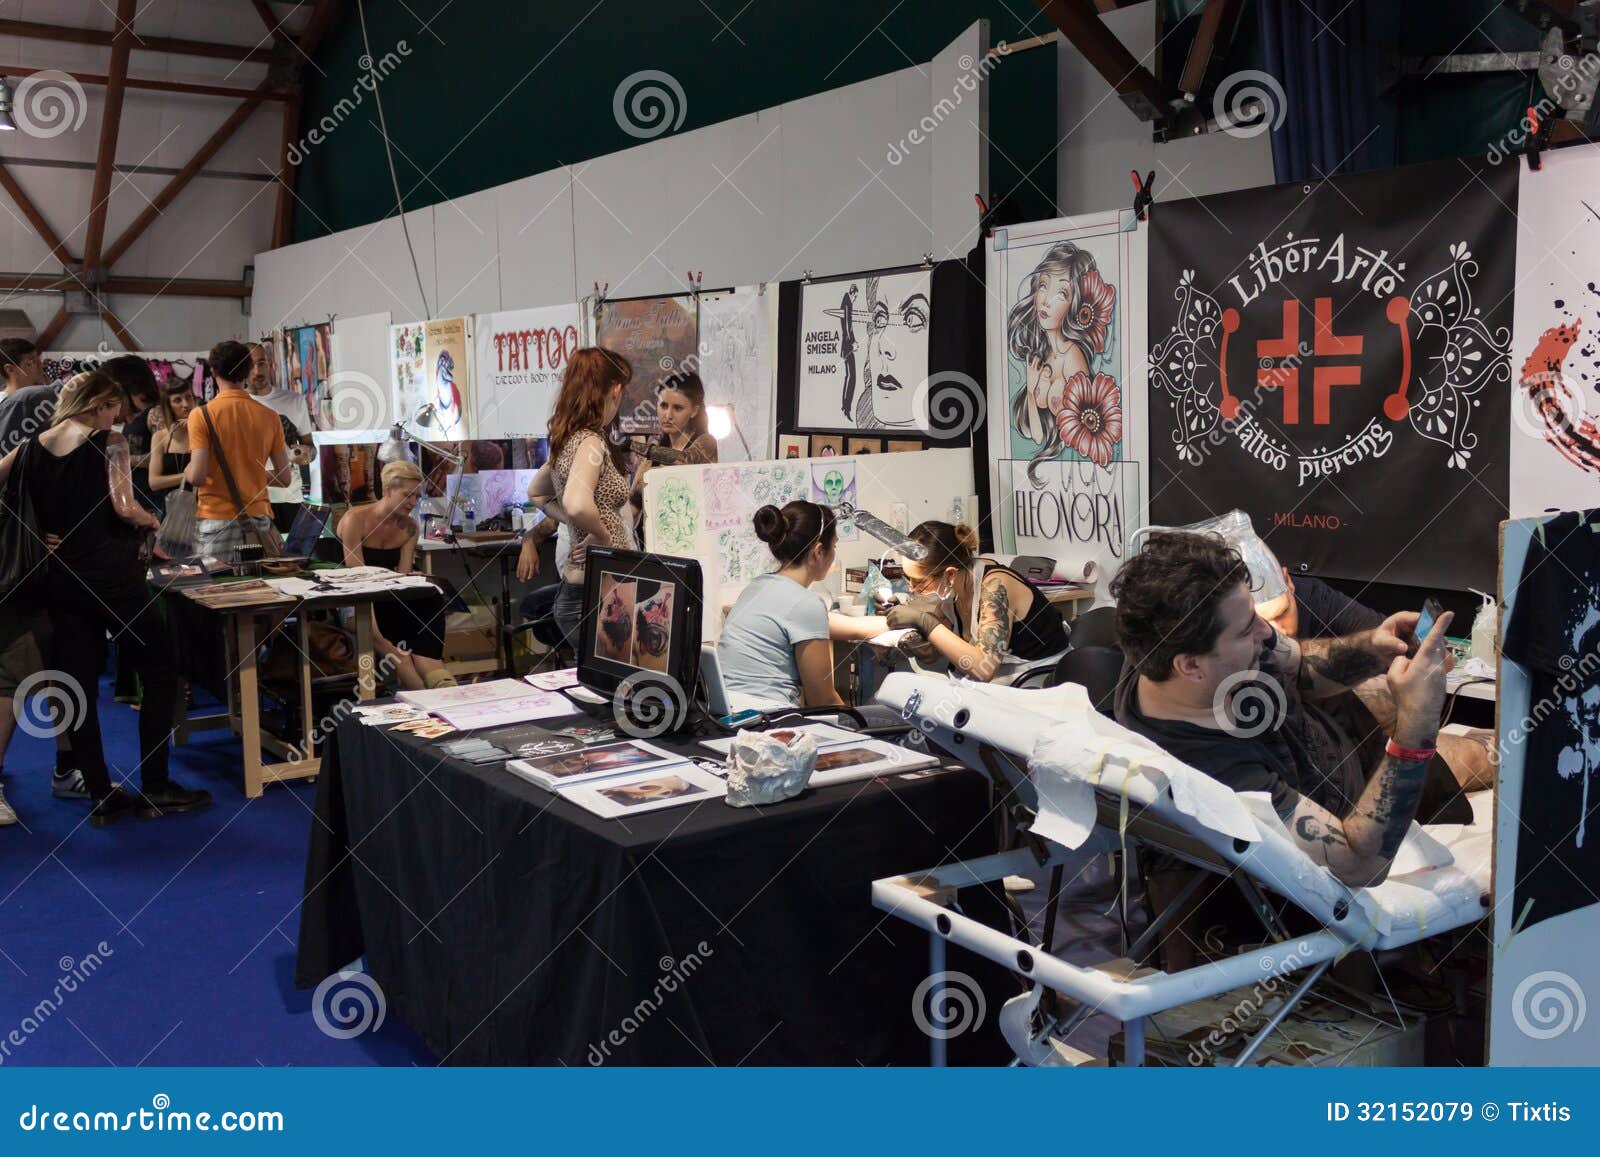 23 Milano Tattoo Convention 2018 | iNKPPL